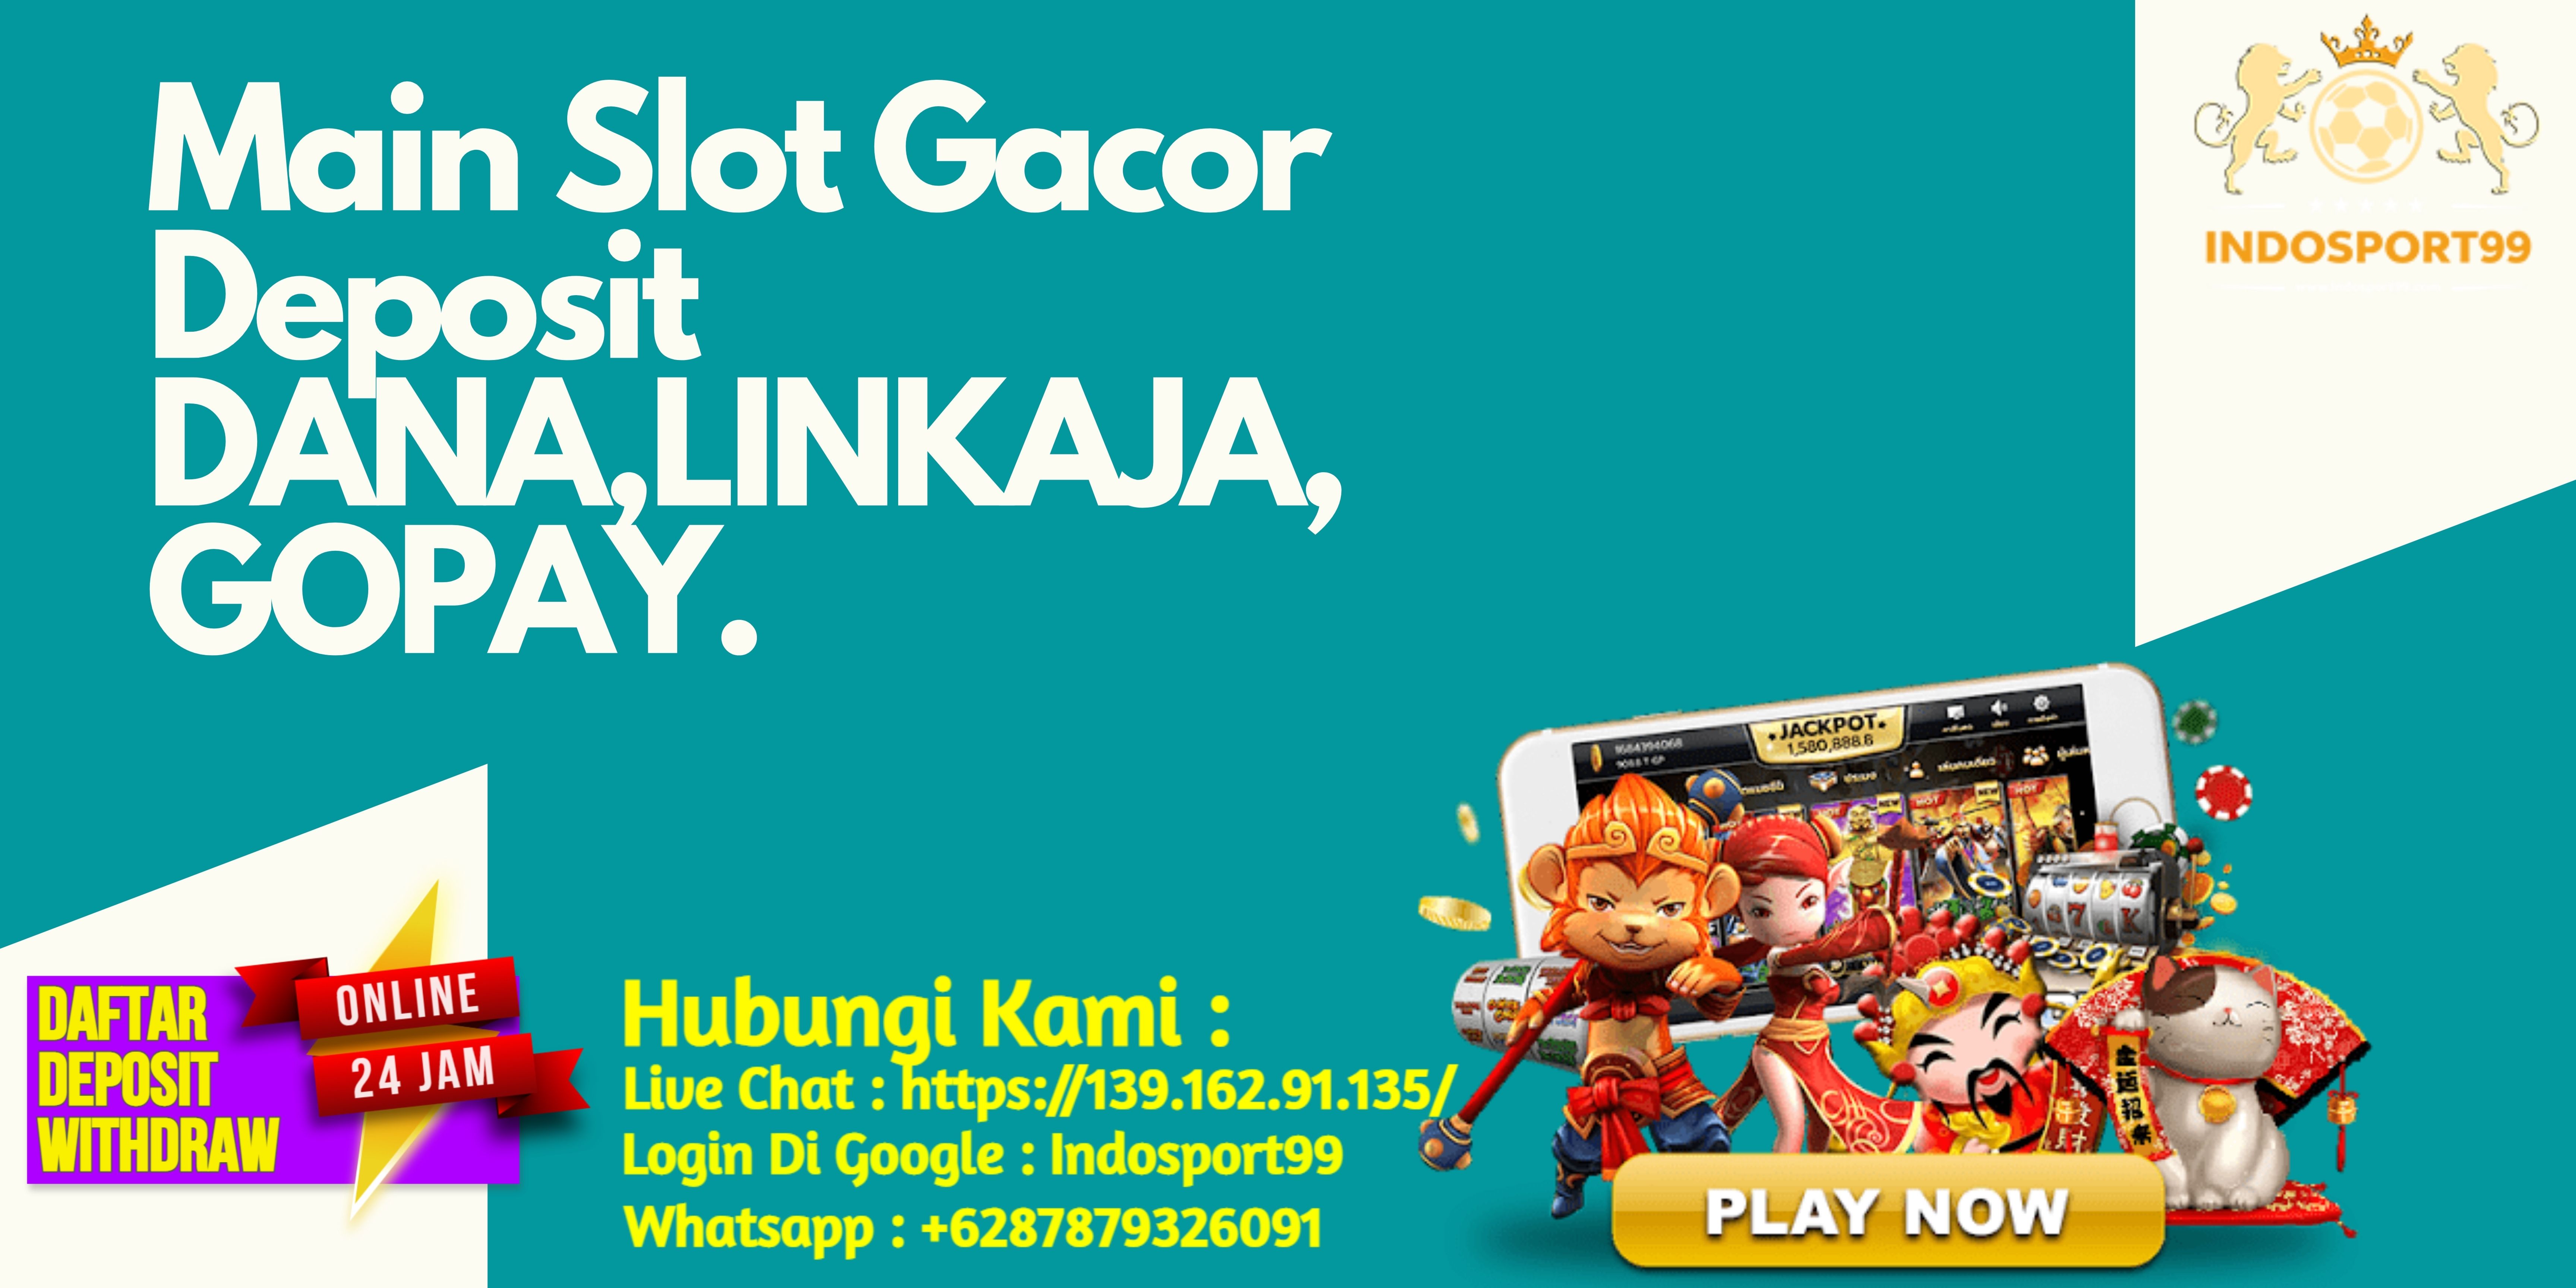 Agen Slot Online Deposit DANA,LINKAJA,GOPAY Paling Gacor